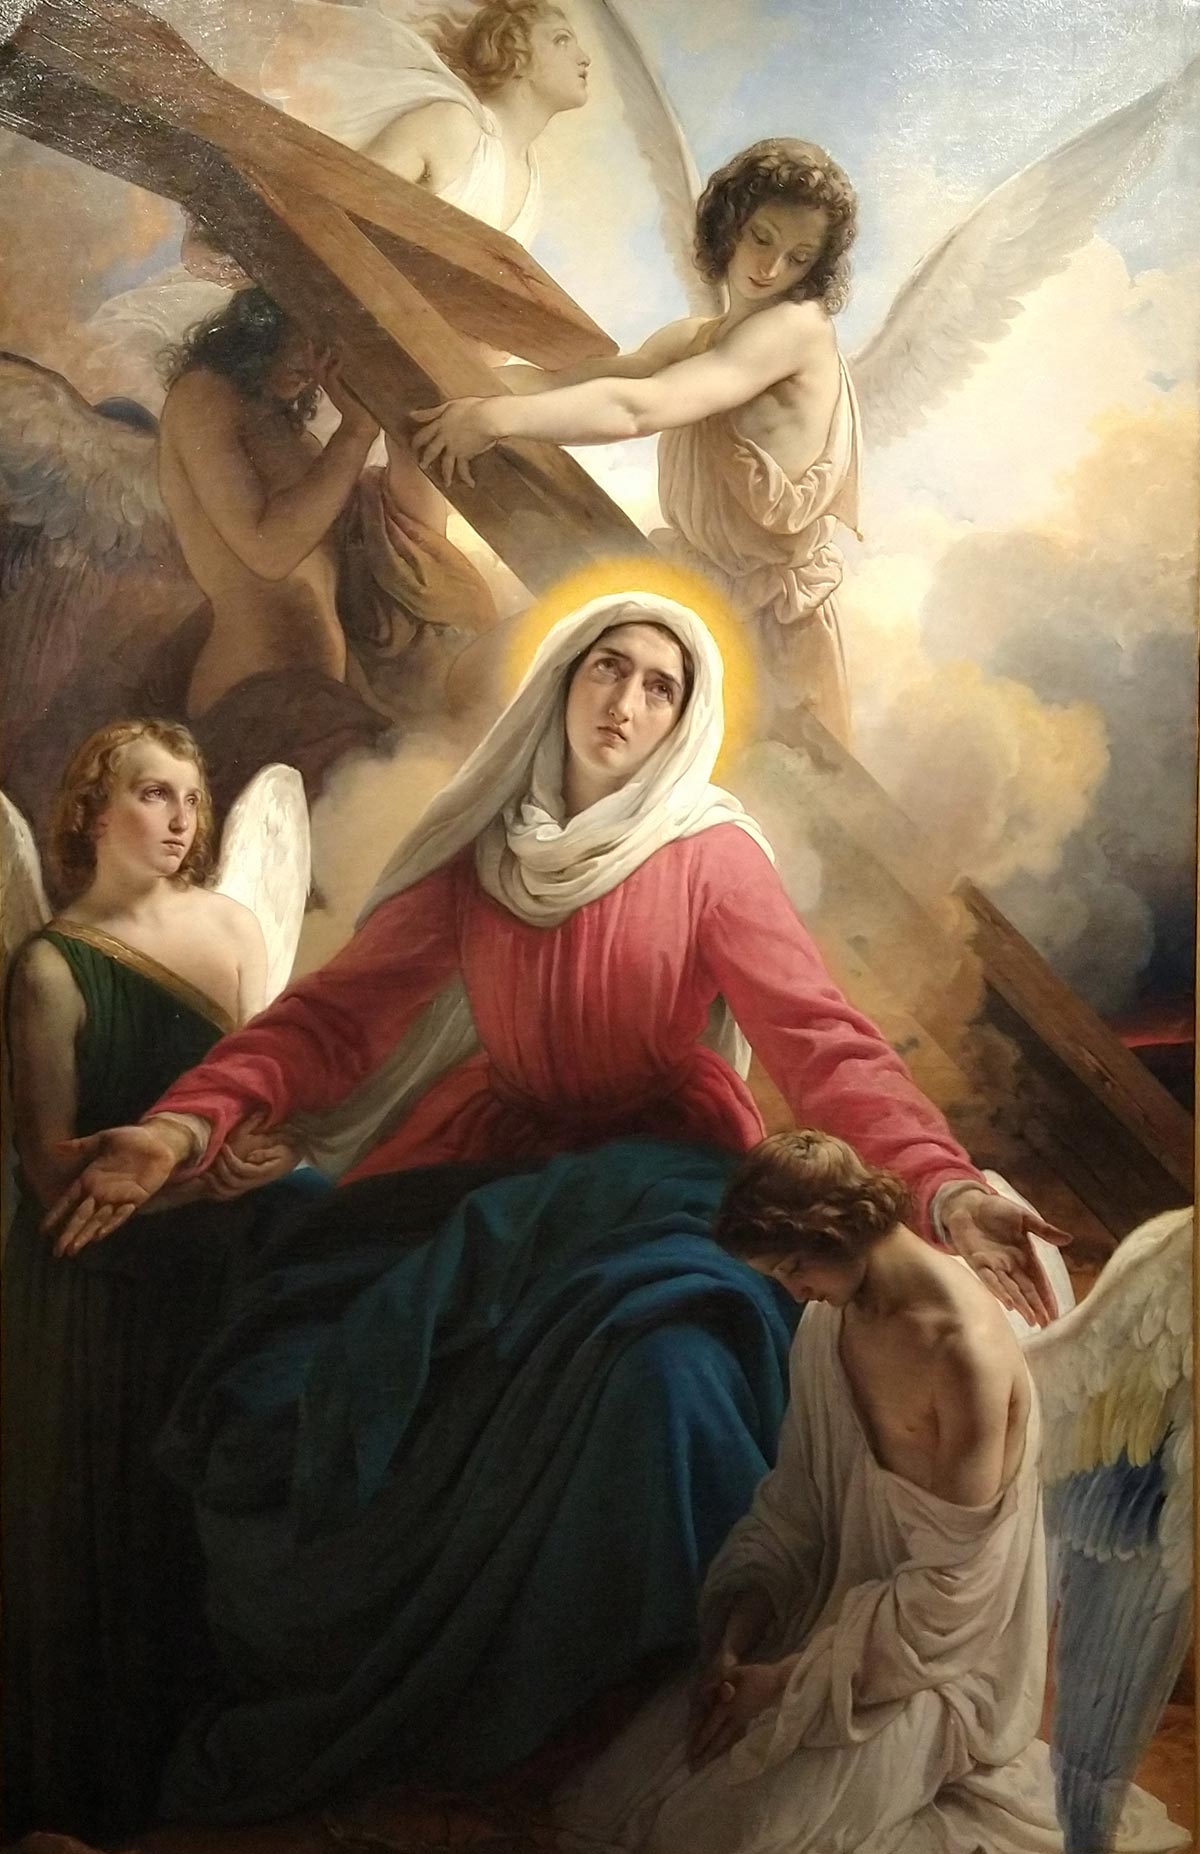 Our Lady of Sorrows by Francesco Hayez